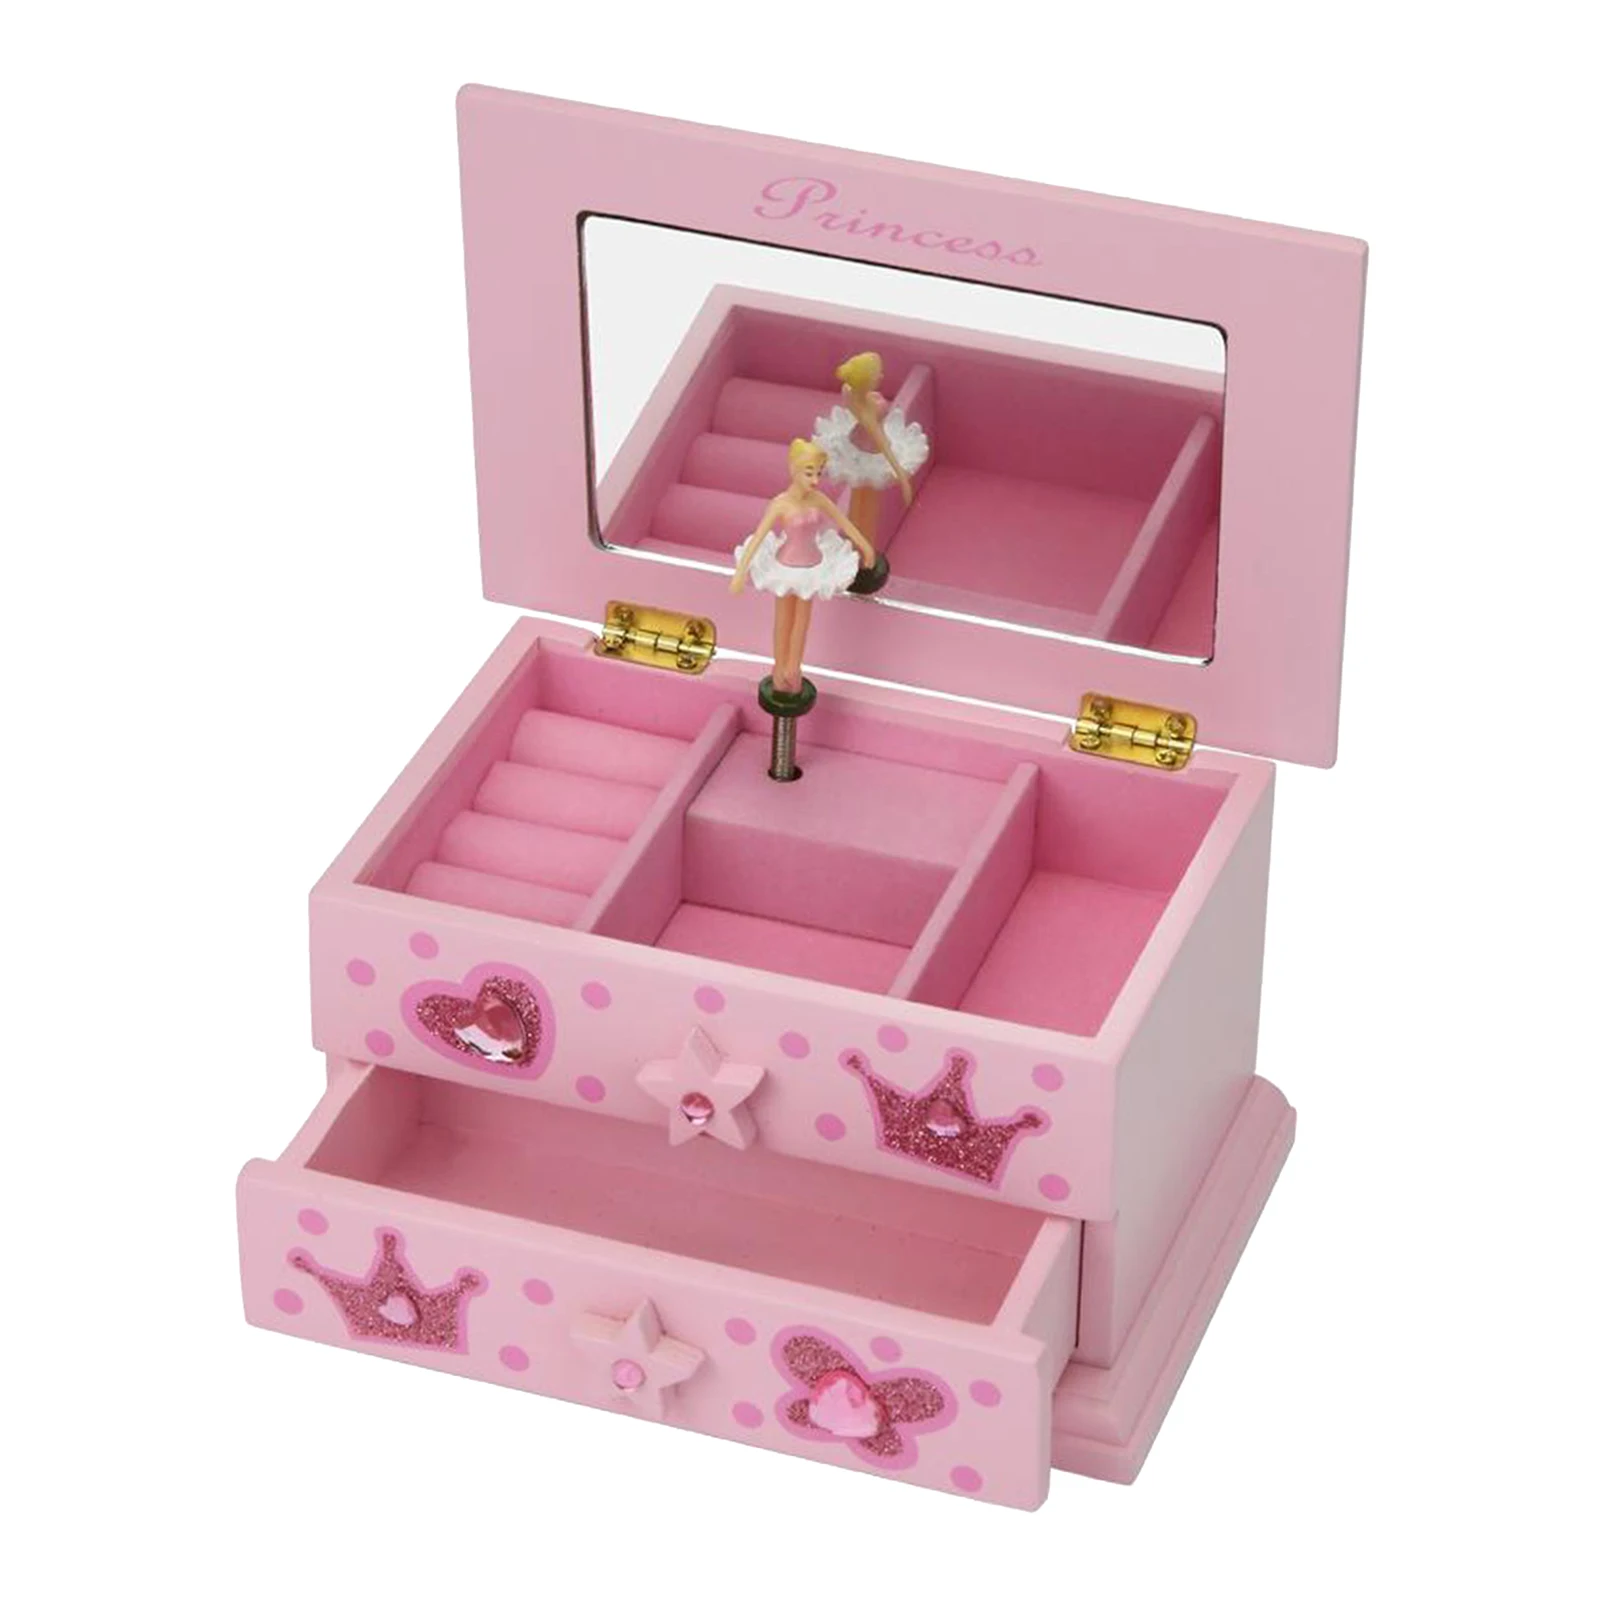 Princess Music Jewelry Box Ring Bracelets Storage Organizer Case Vinity Dresser Wedding Valentine`s Day Musical Box Gift